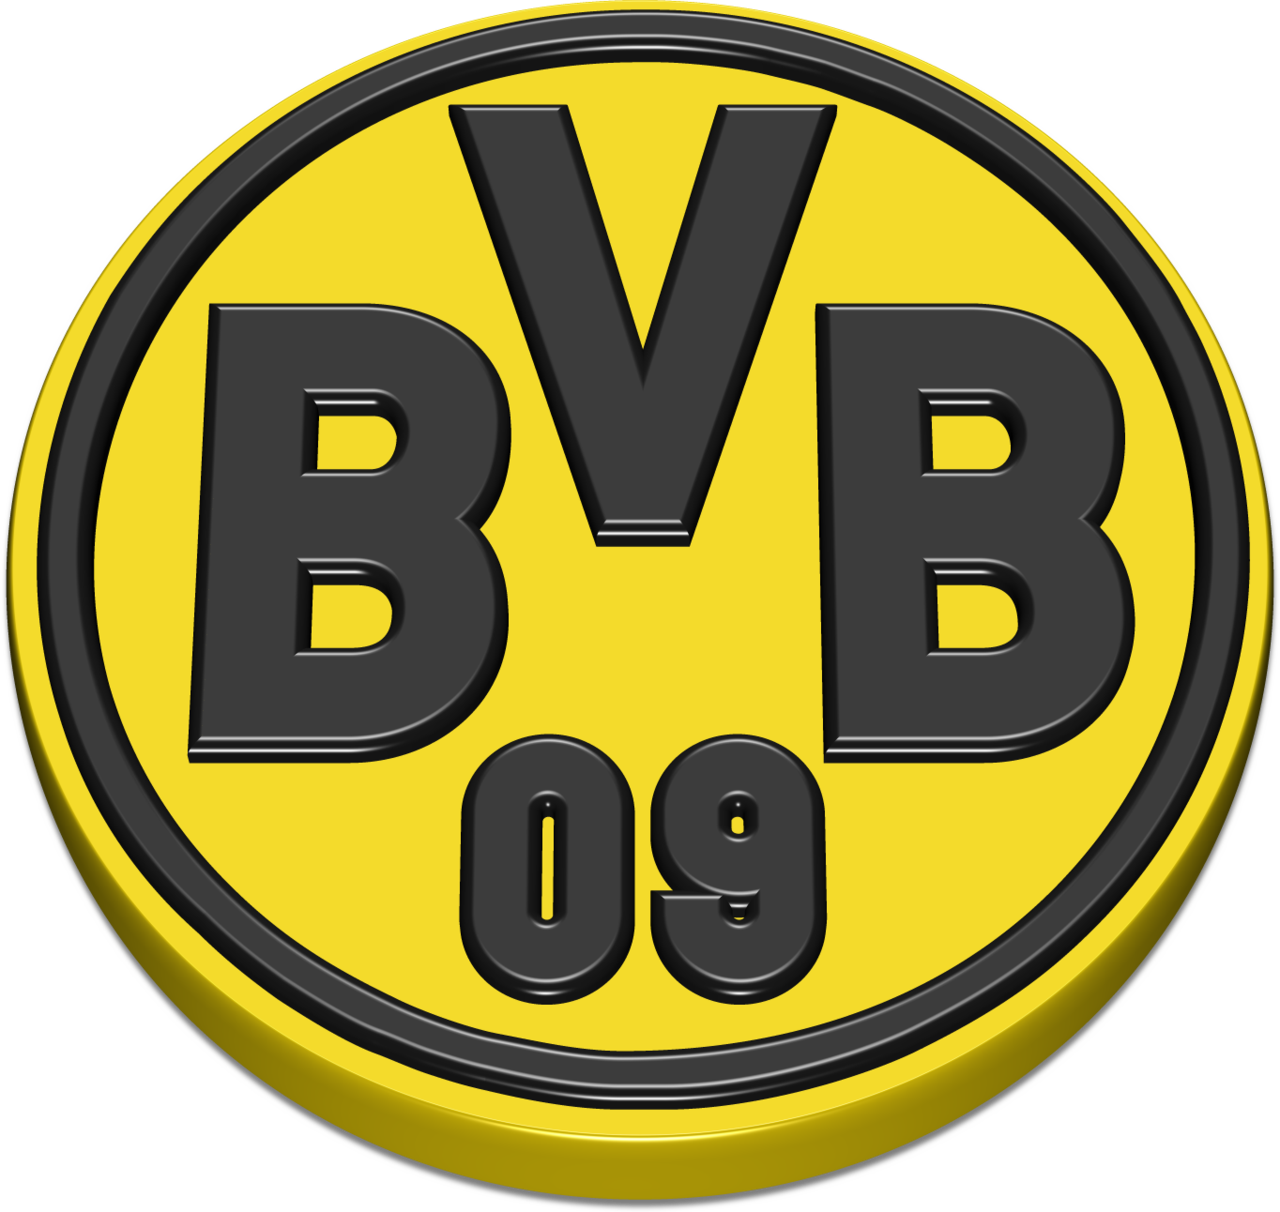 Immagine Trasparente di Borussia Dortmund